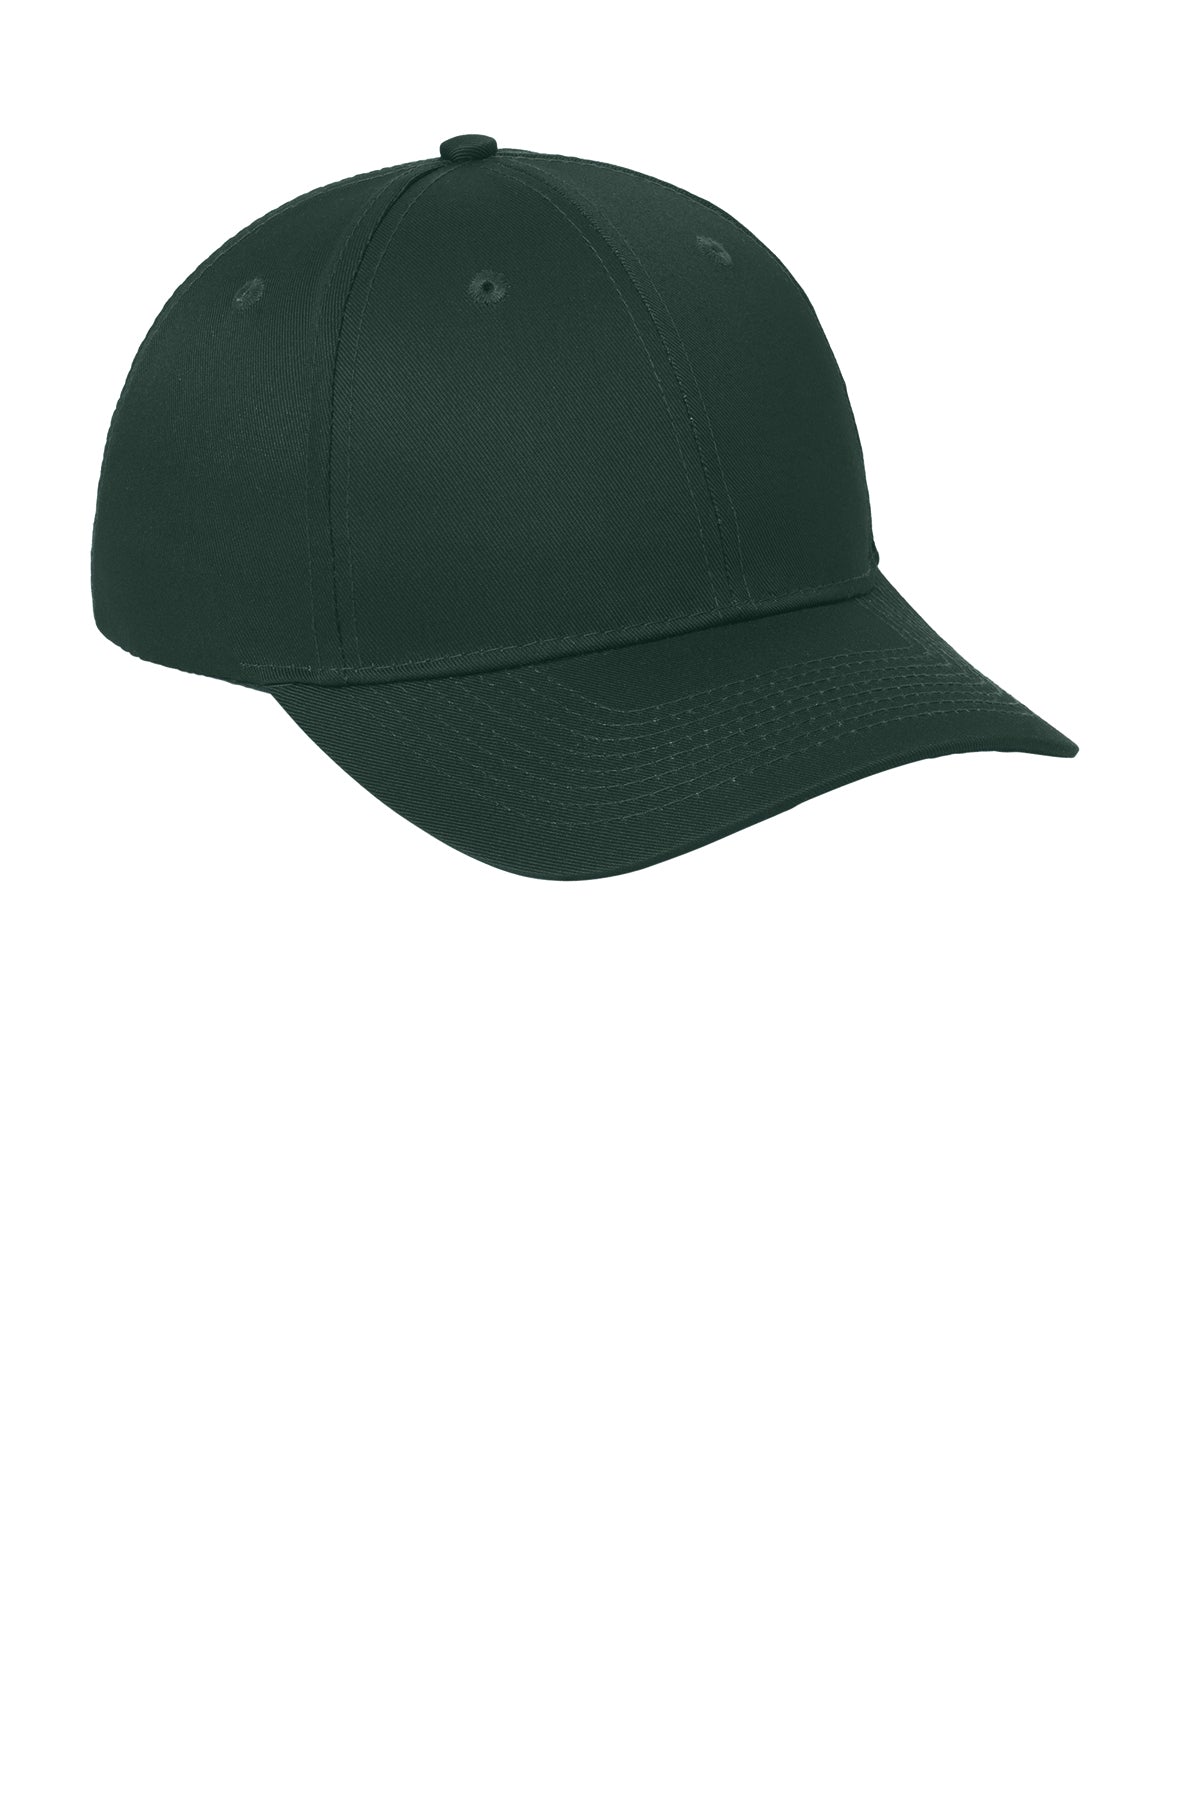 Port Authority Uniforming Branded Twill Caps, Dark Green